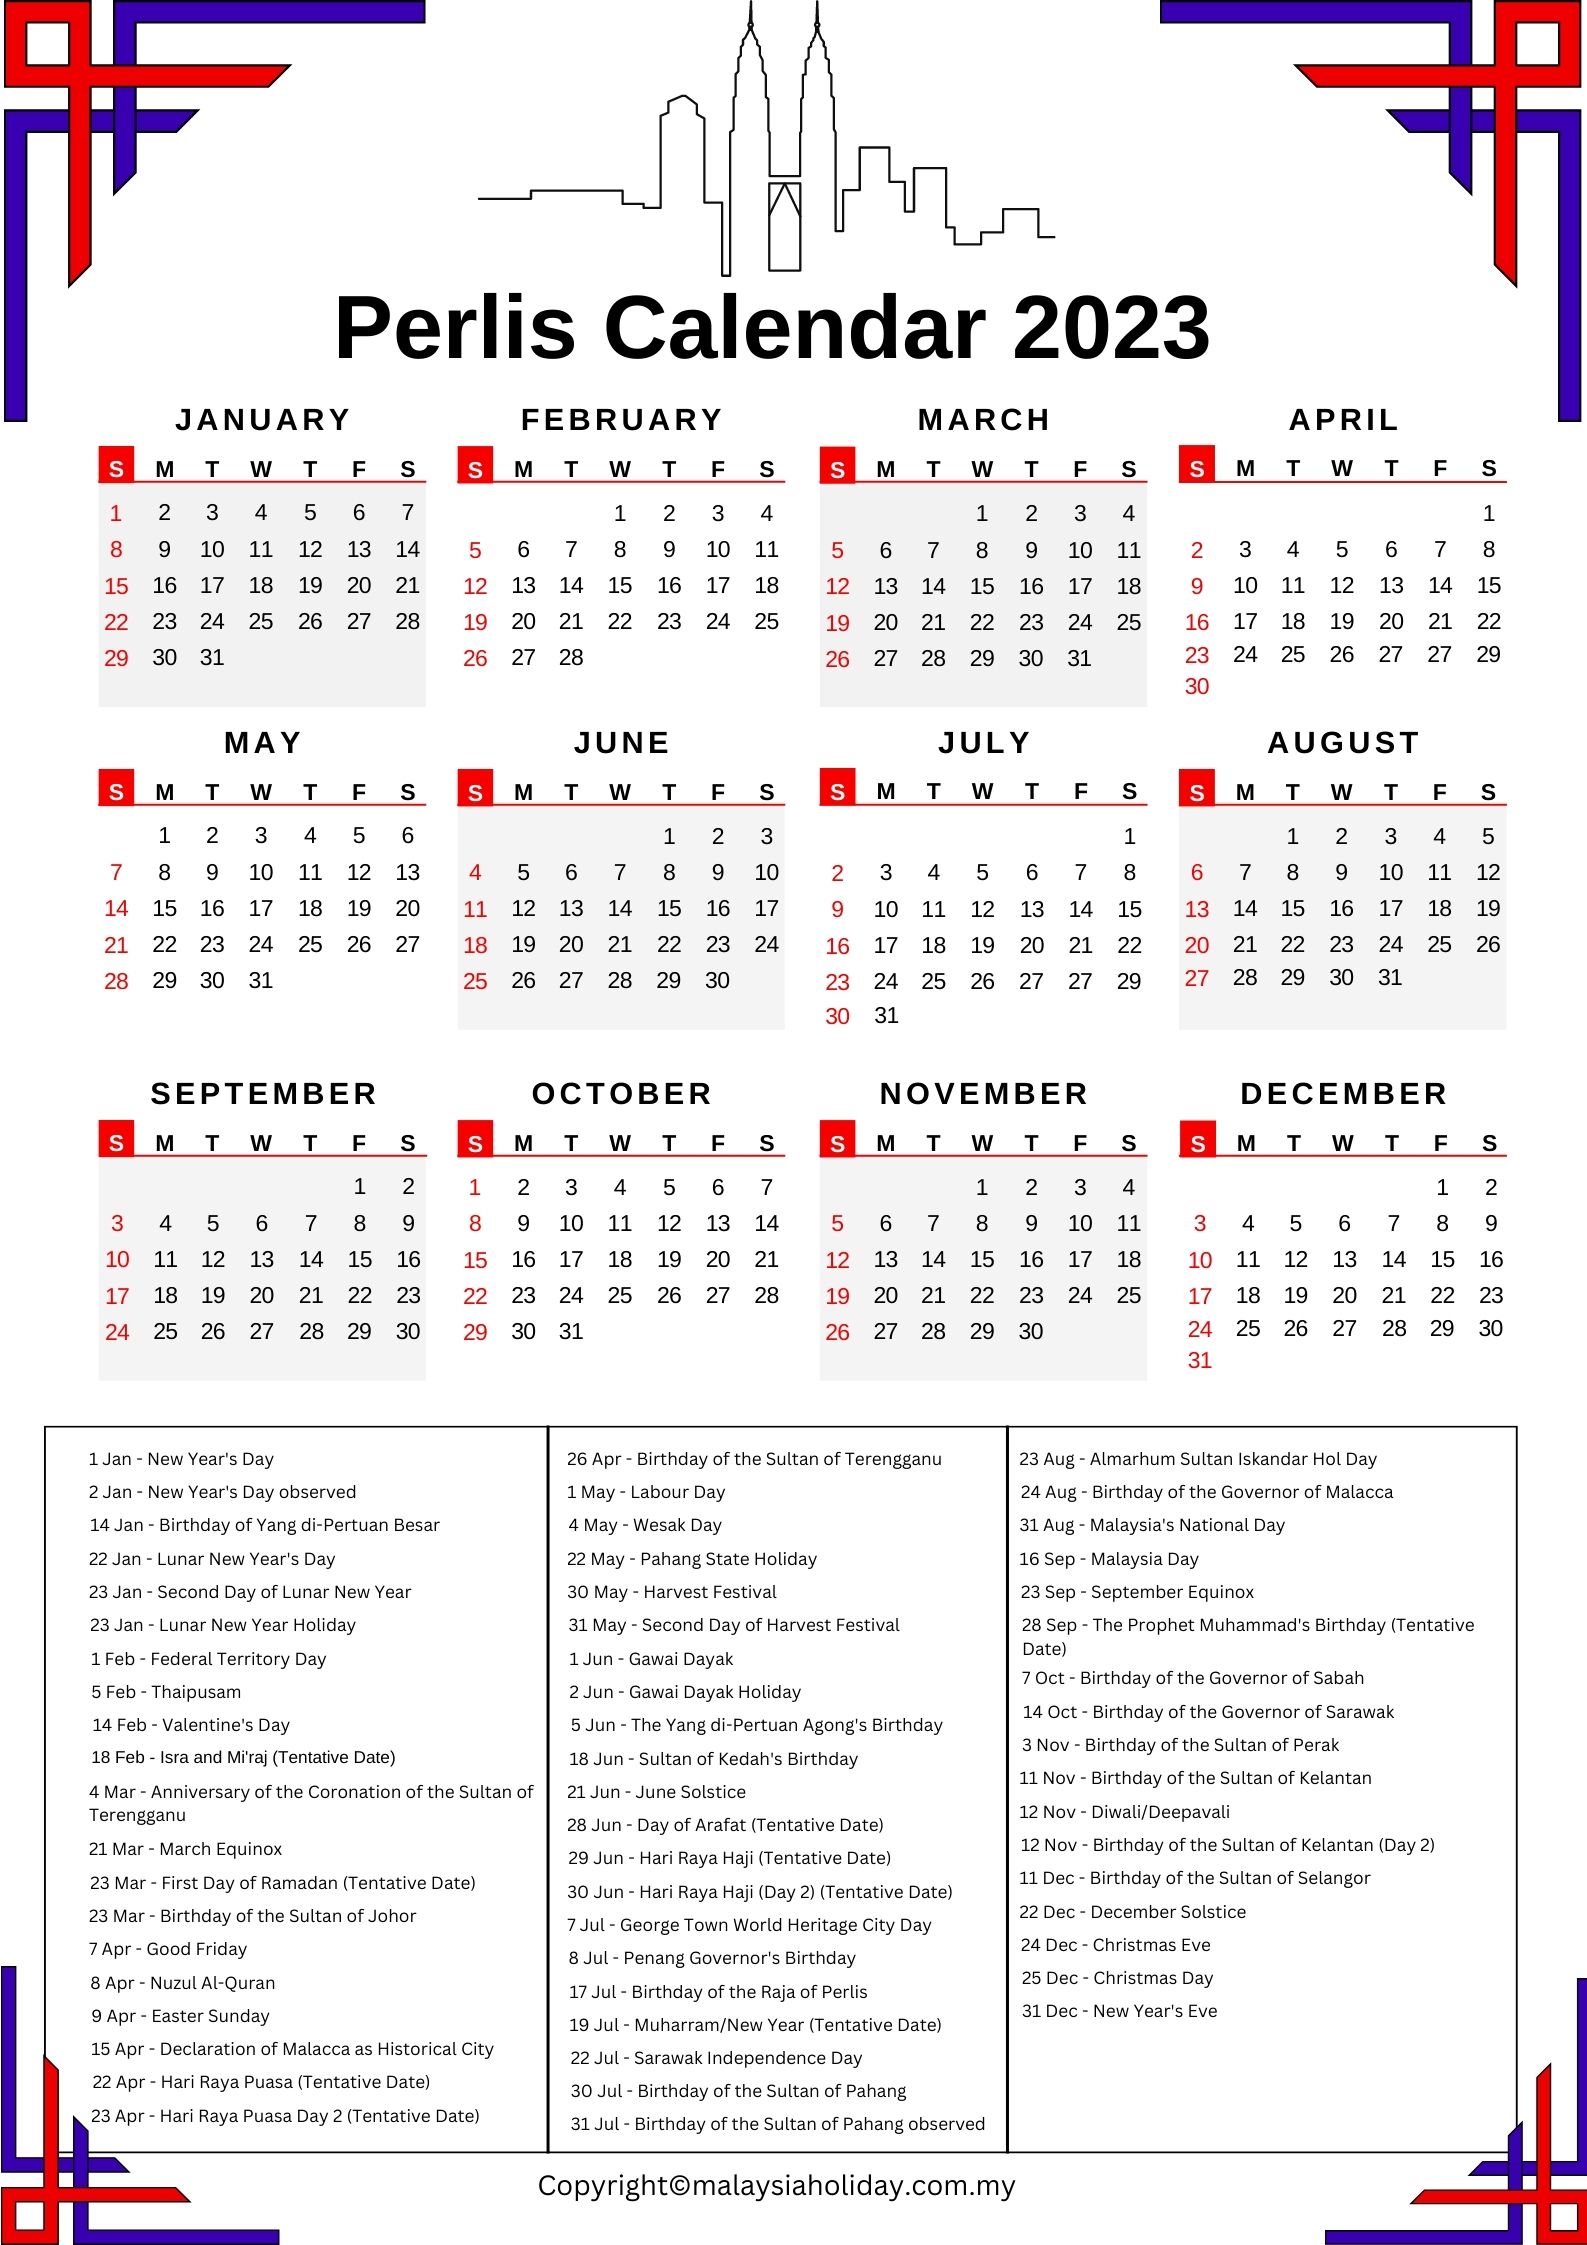 Perlis Public Holidays 2023